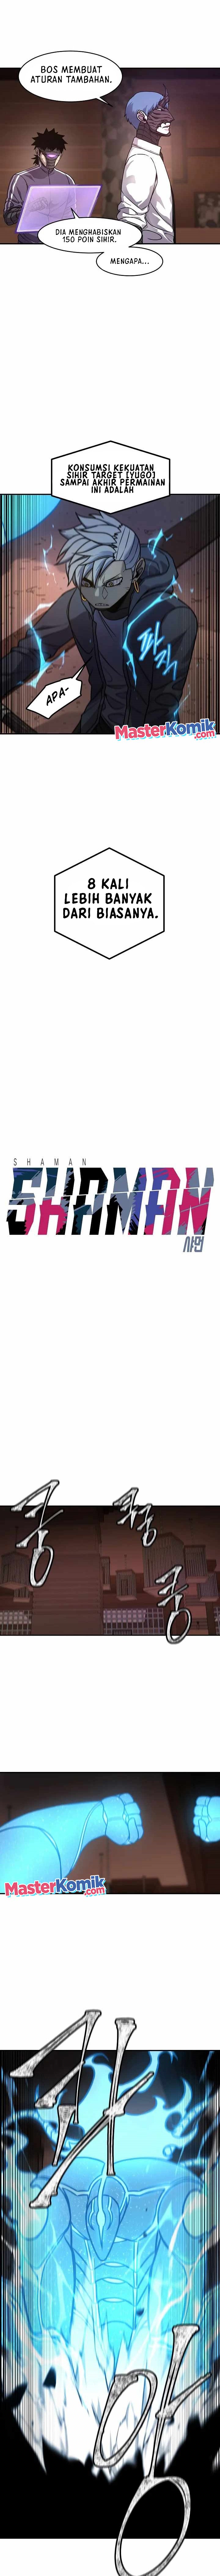 Shaman Chapter 63 - 91